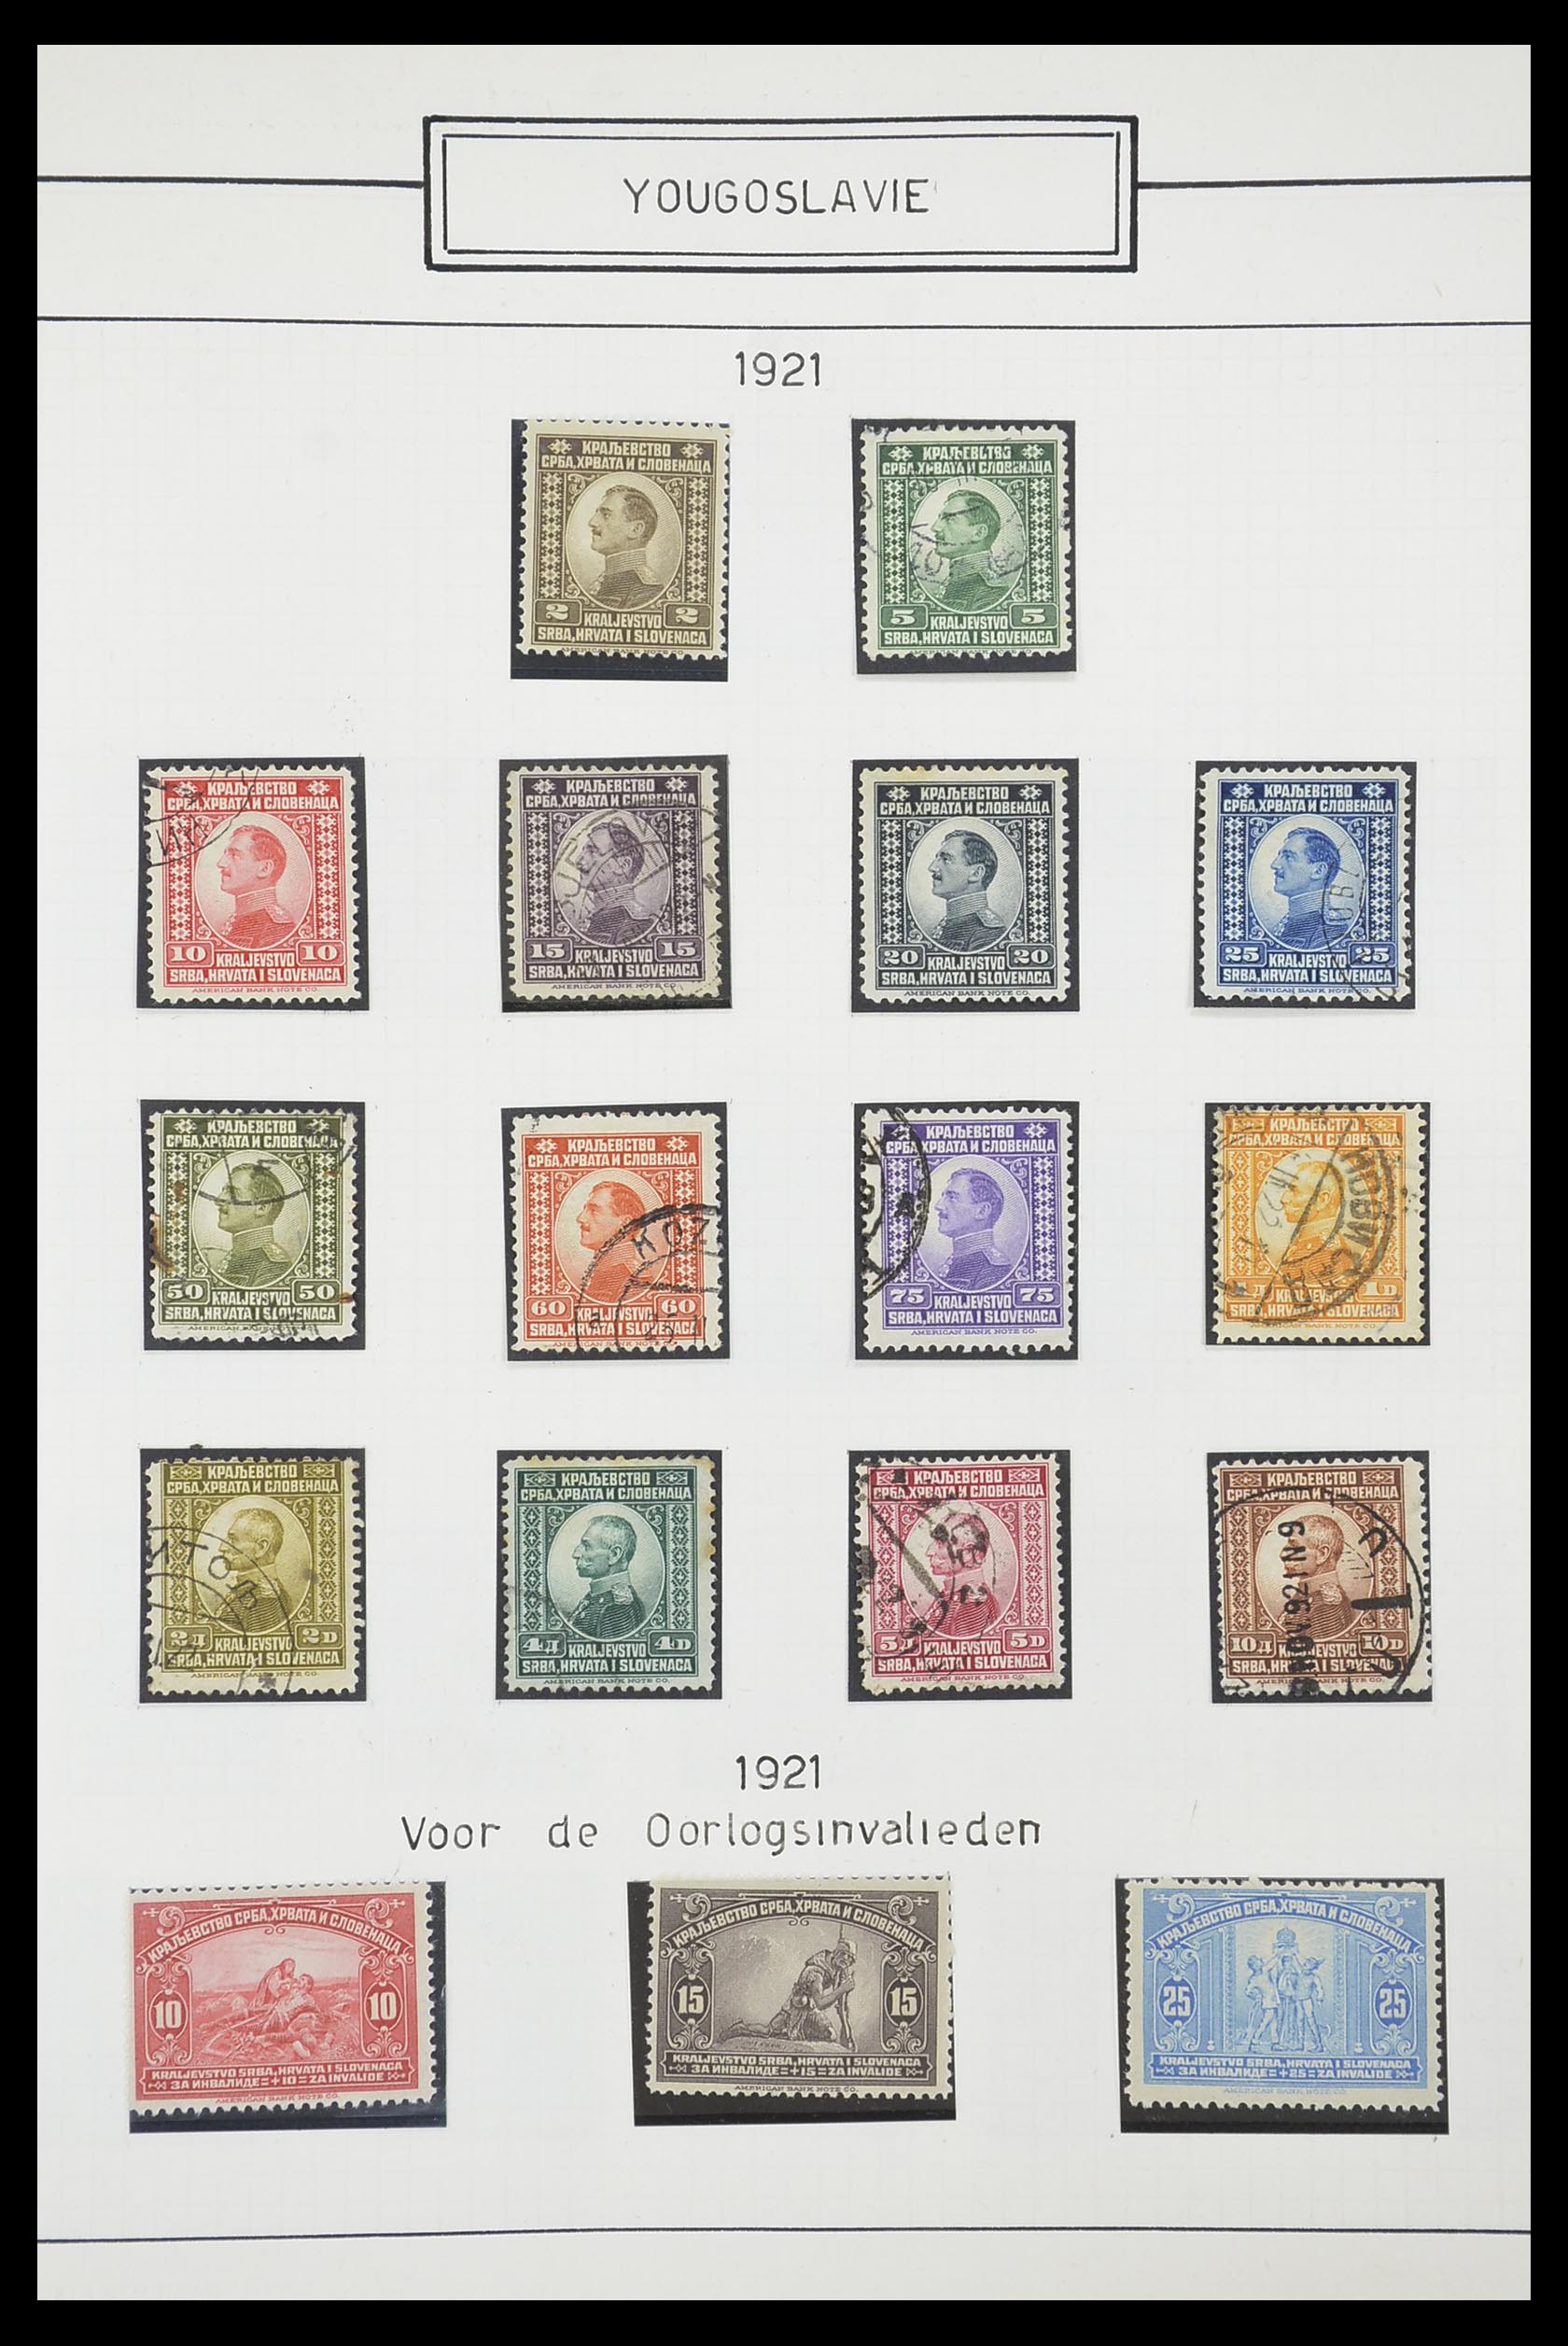 33888 015 - Stamp collection 33888 Yugoslavia 1906-1983.